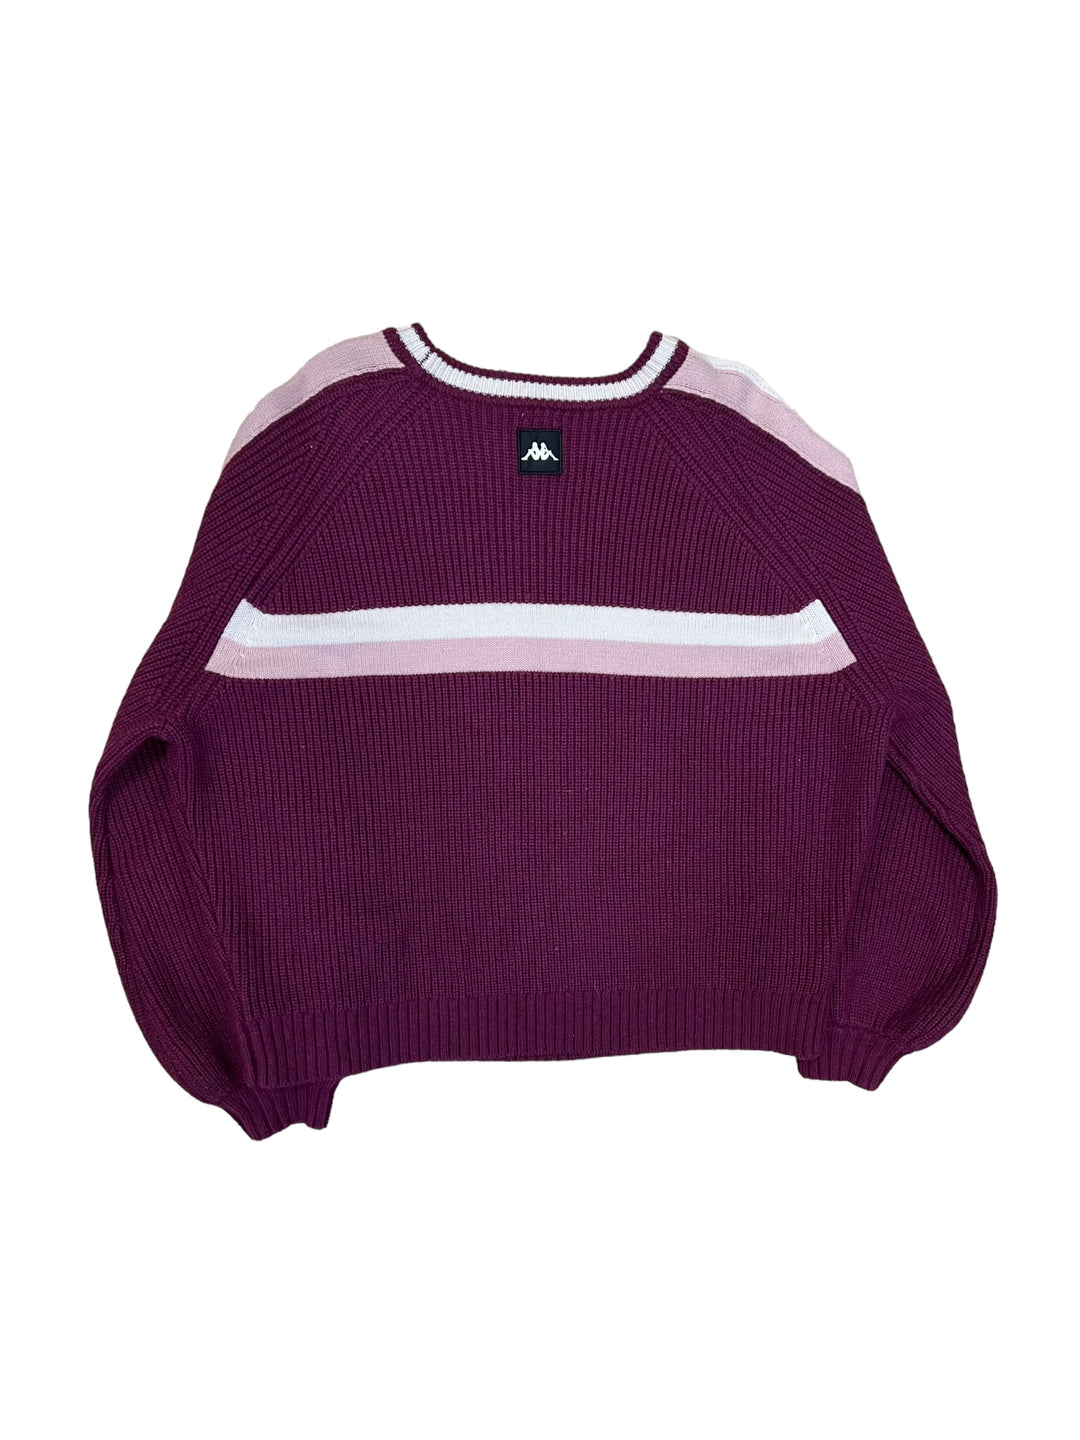 Kappa Vintage Knit Sweater Women’s large